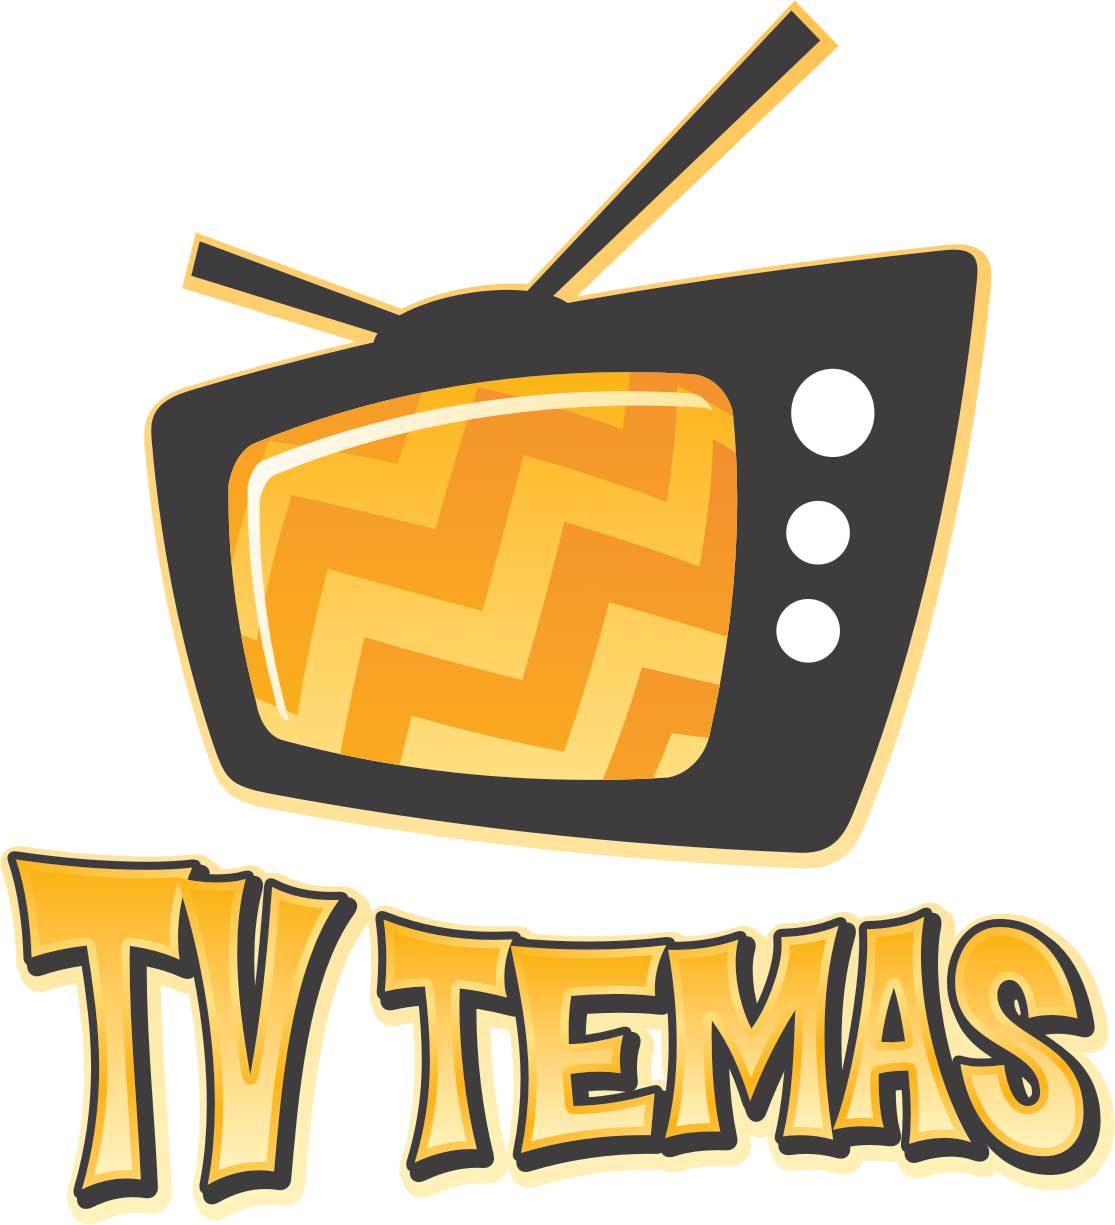 Tyrkplay tv. Телевизор логотип. Логотип телепередачи. Логотип развлекательного канала. Телевизор с логотипом hj.